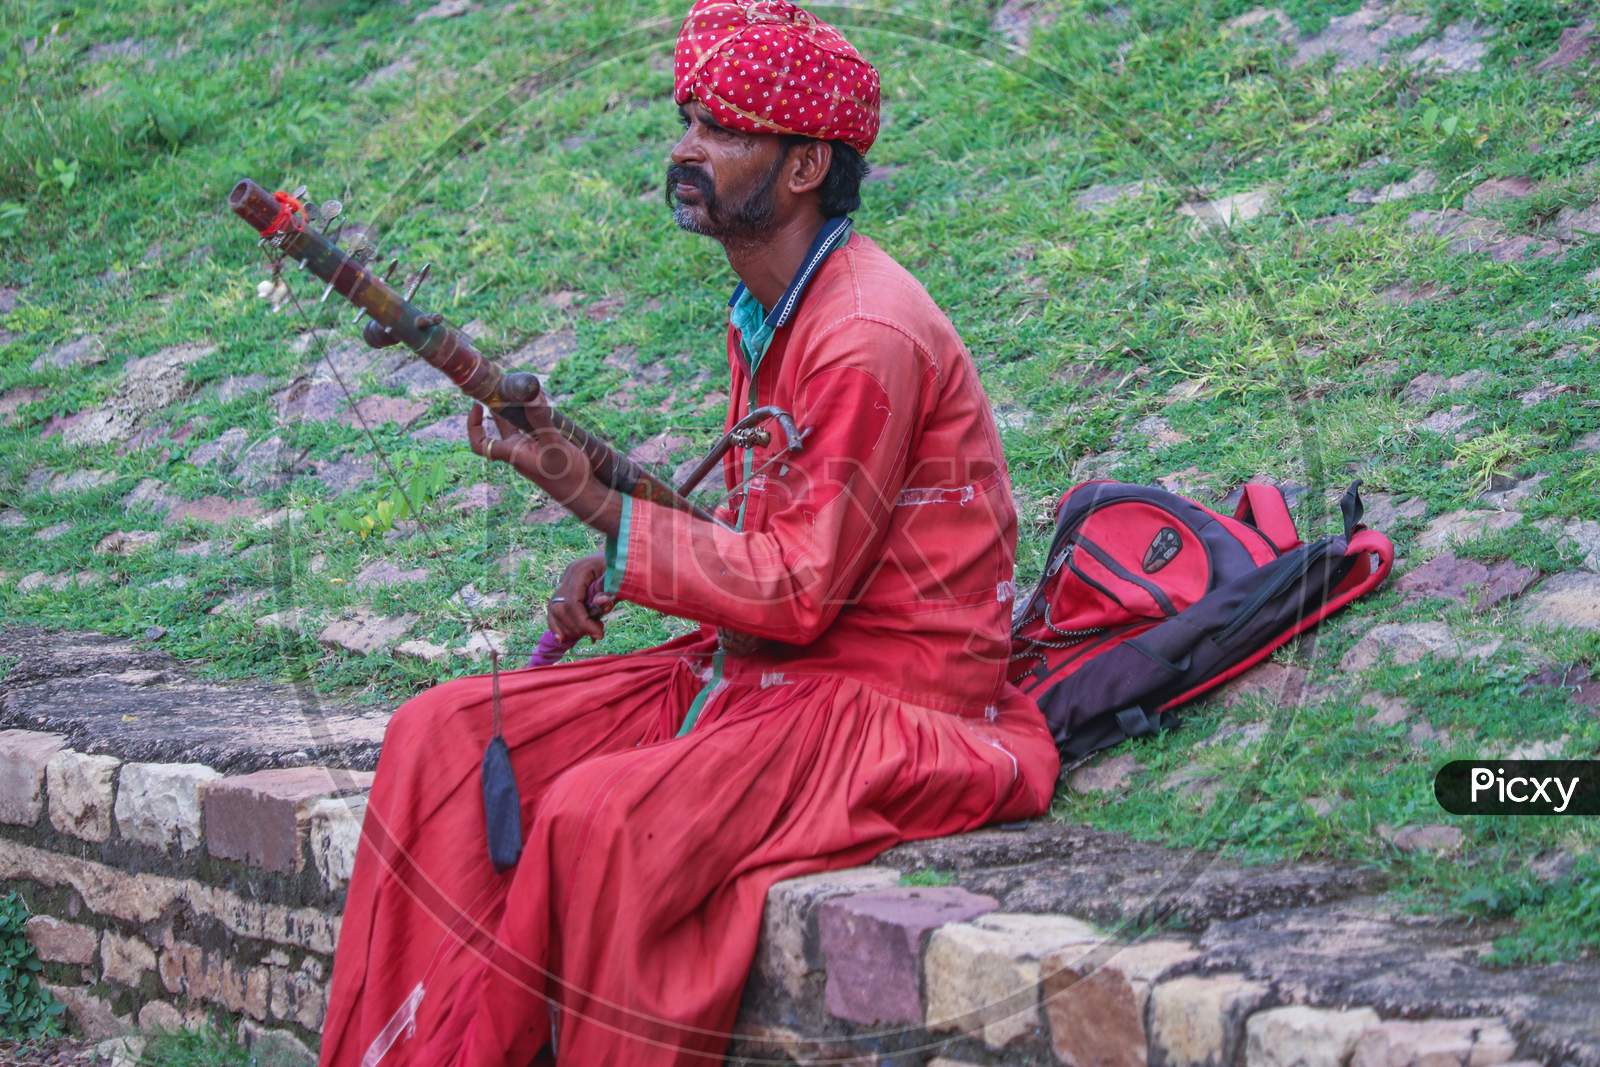 Man playing string instrument